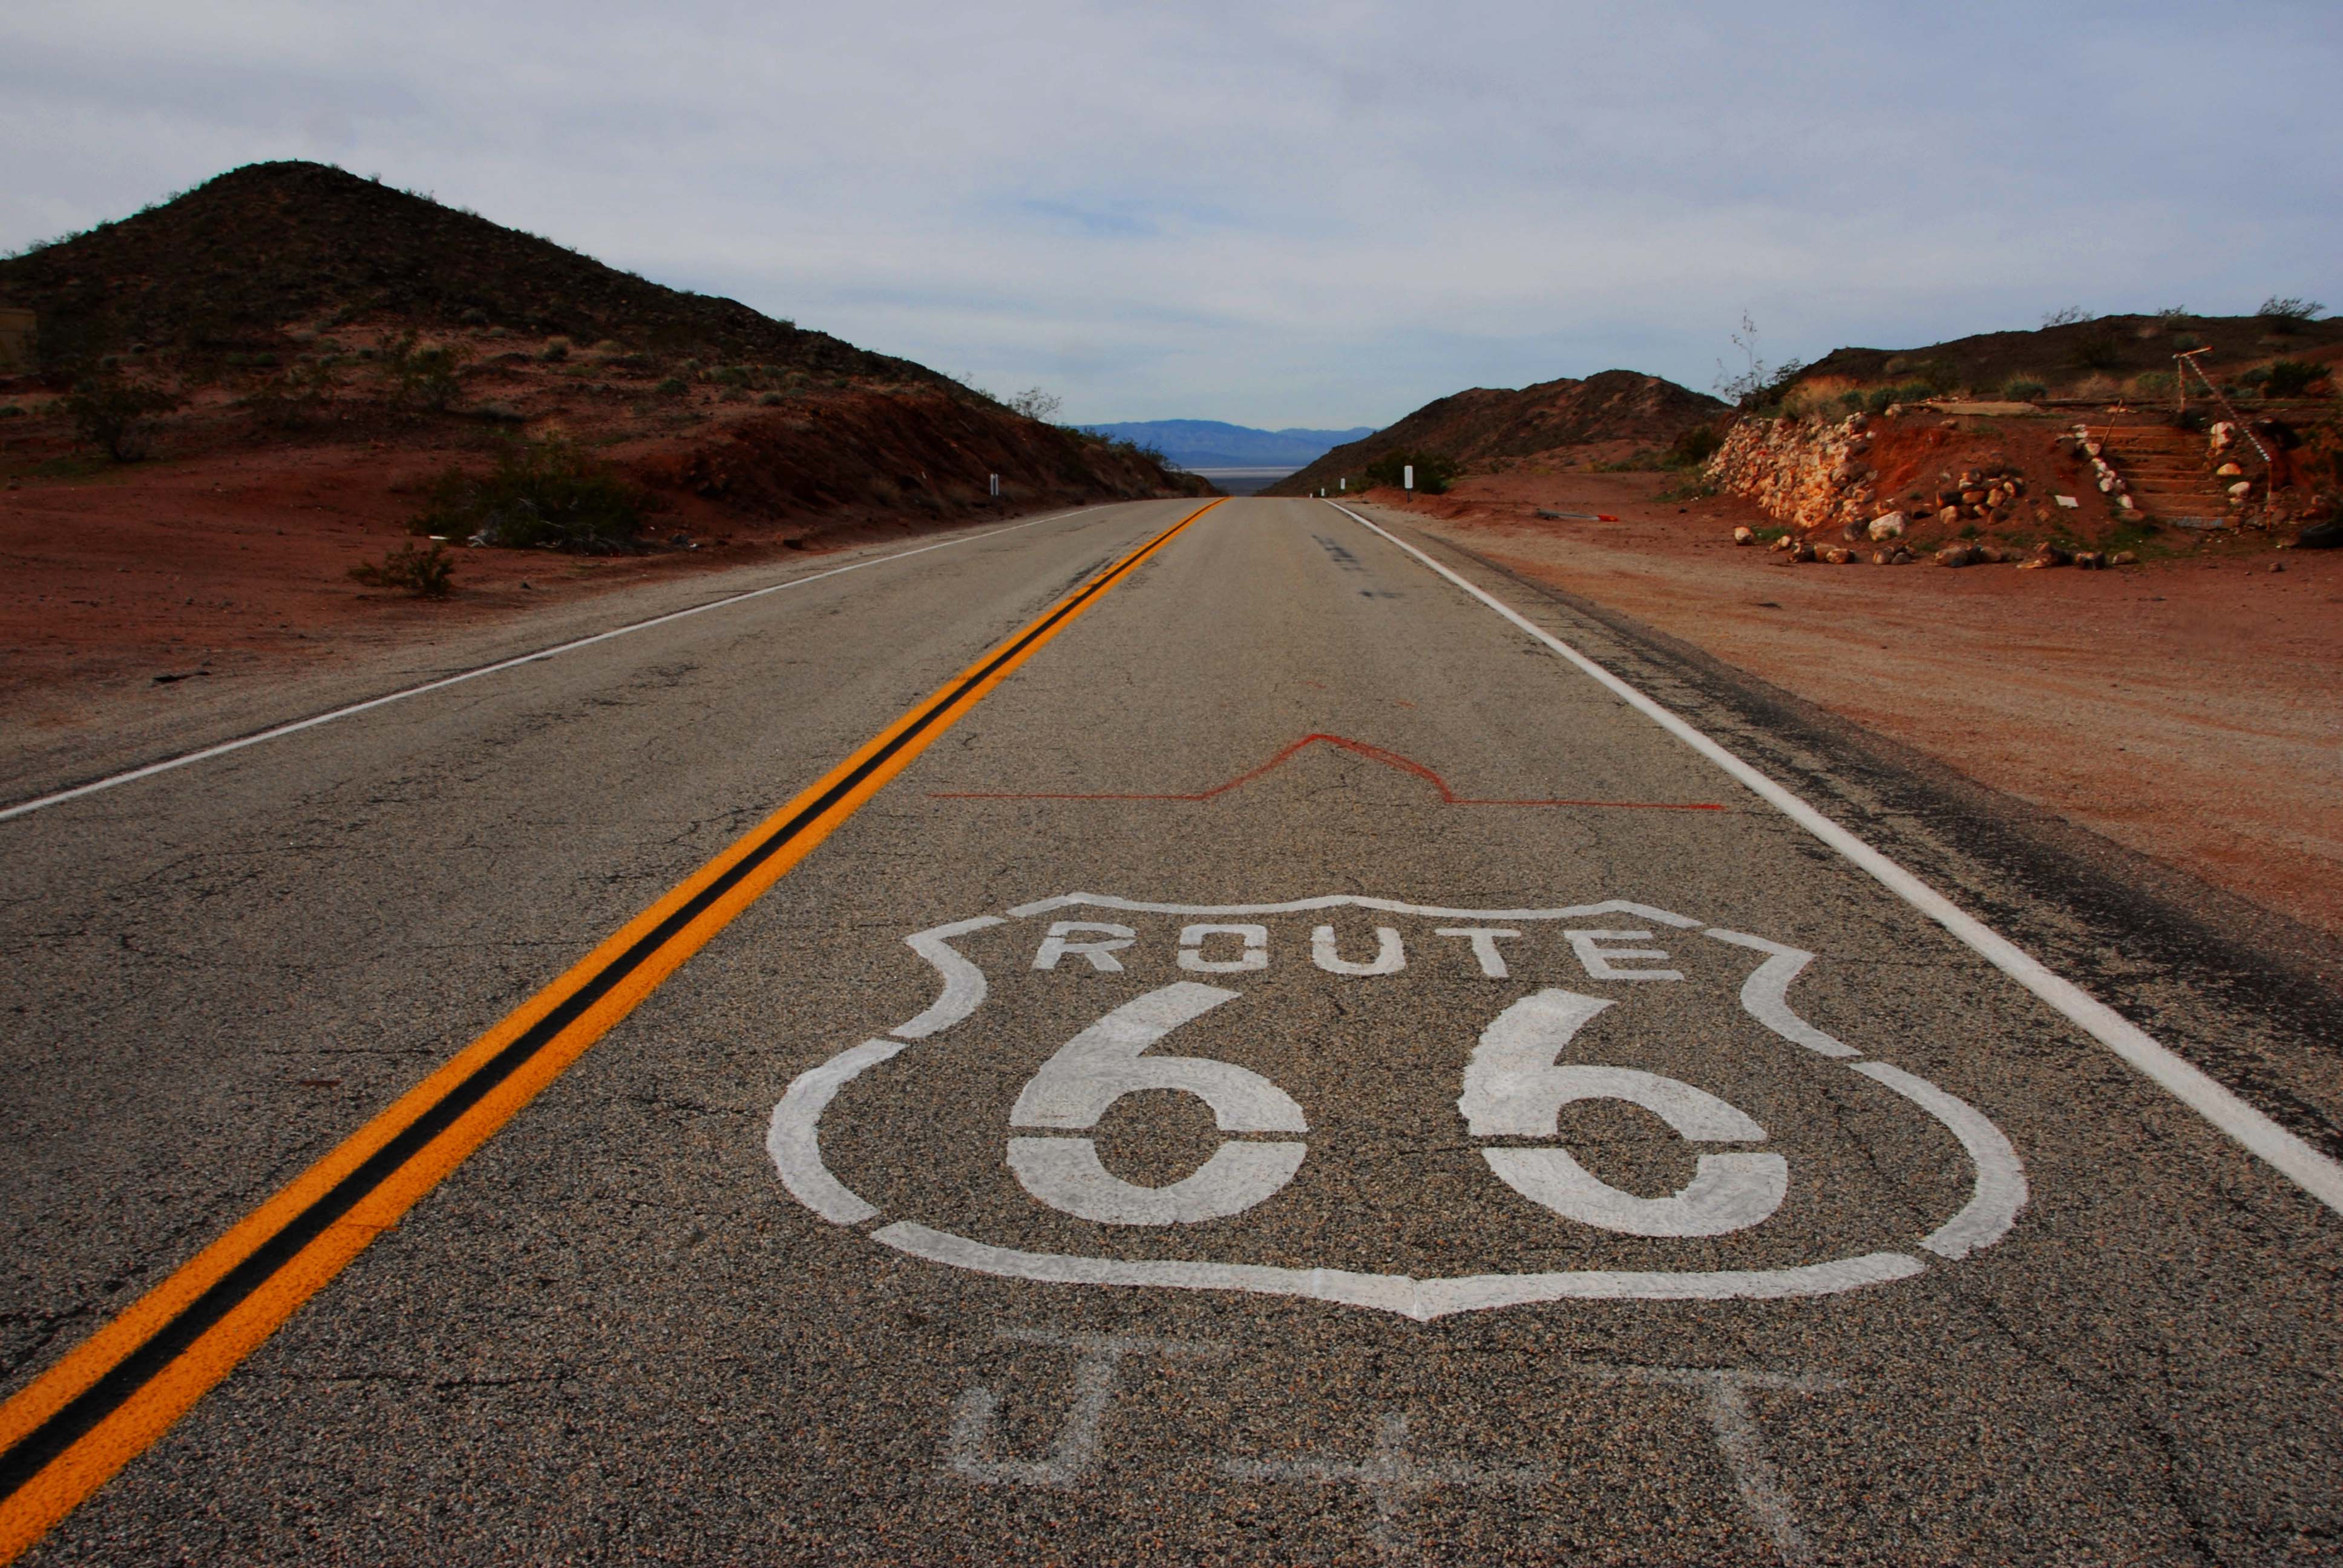 Route 66 Desktop Wallpapers - Top Free Route 66 Desktop Backgrounds ...